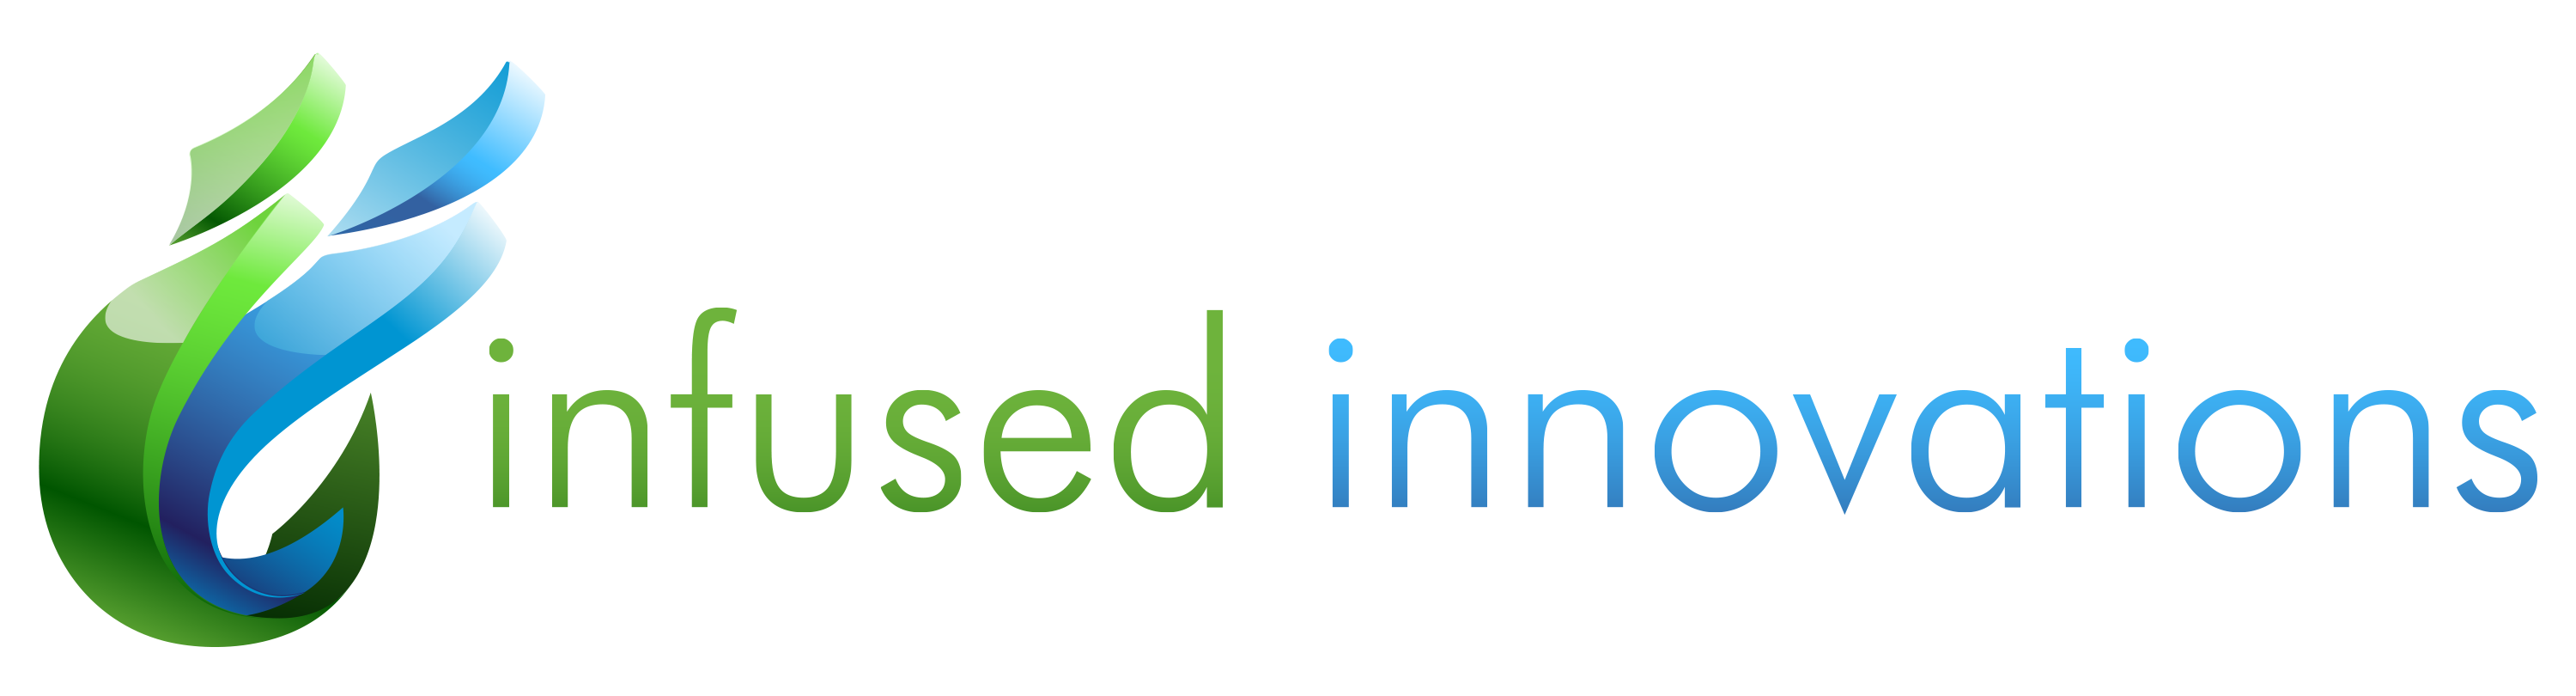 Infused Innovation Logo